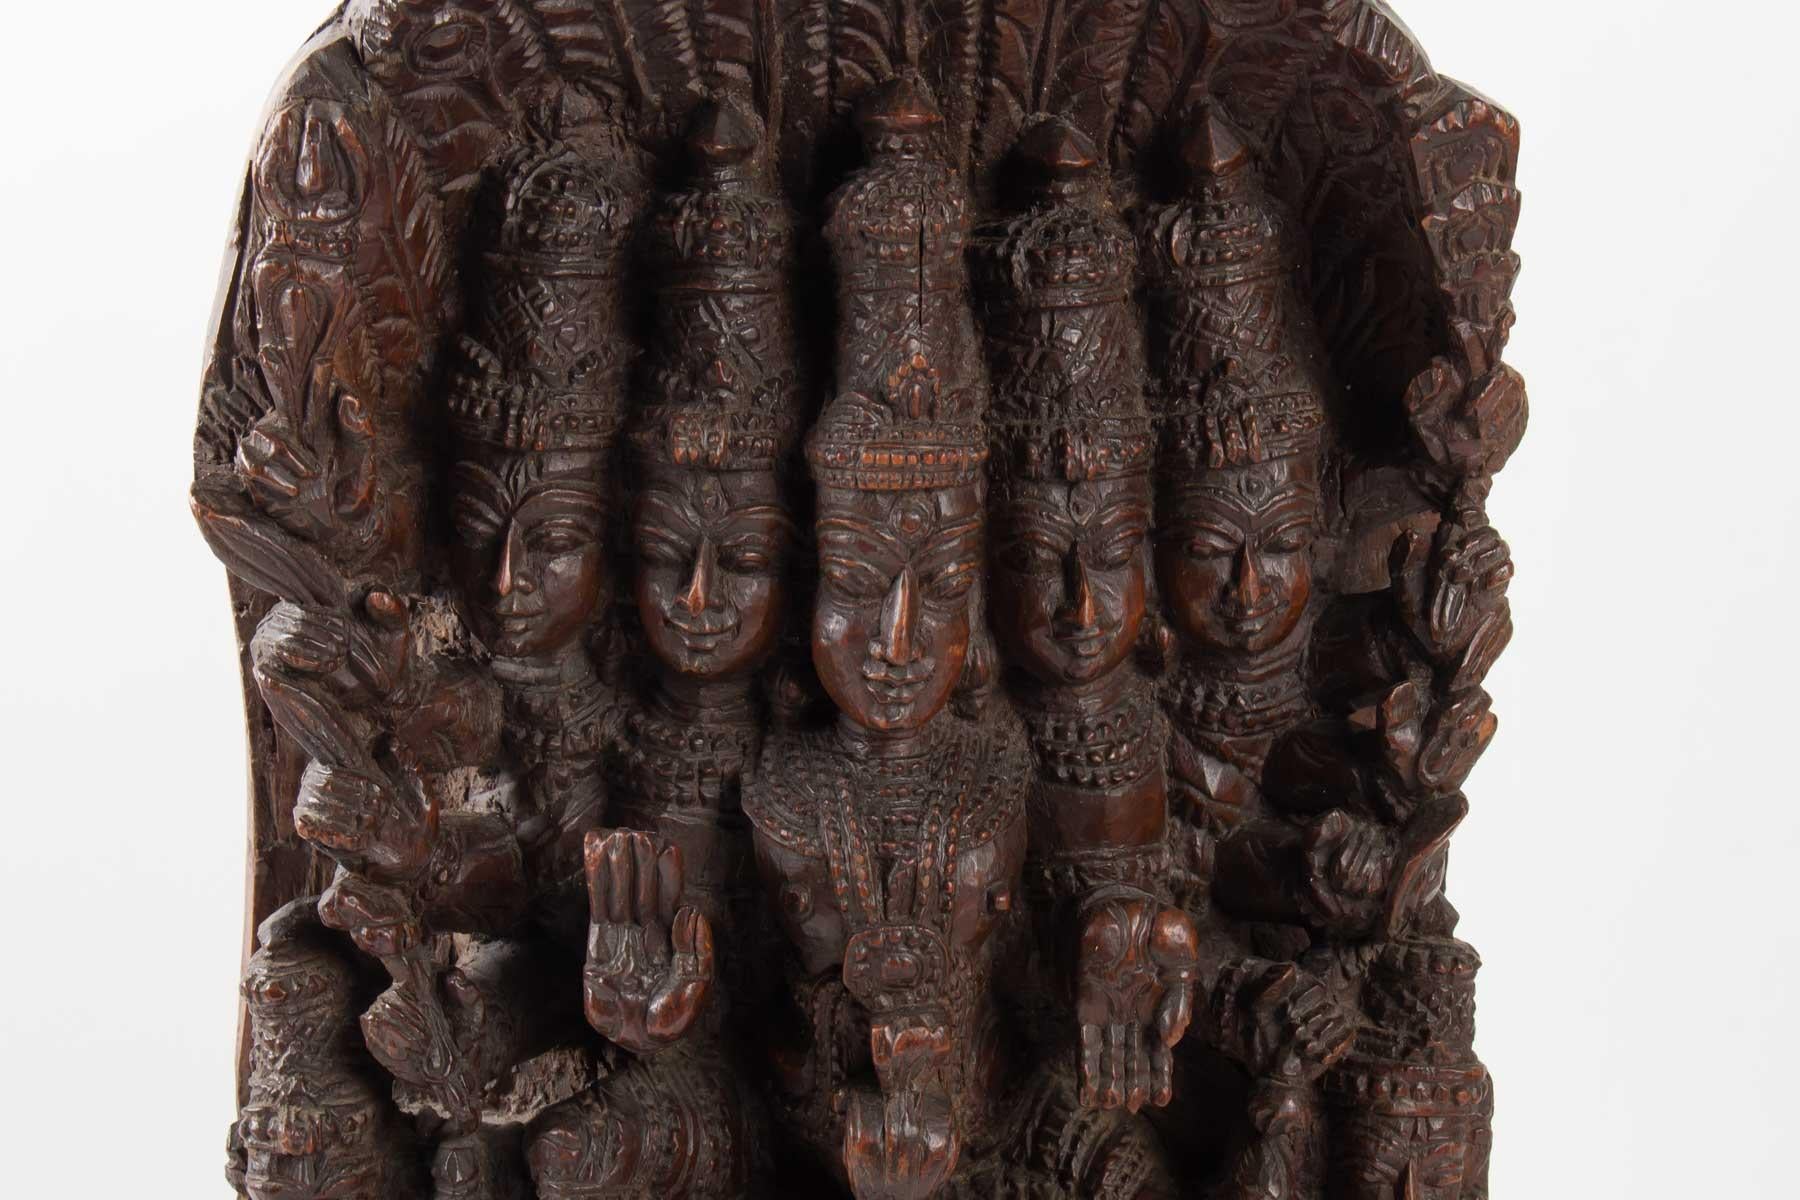 Indian low relief, India, antique 19th century carved wood. Skanda.
Measures: H 50cm, W 30cm, W 12cm.